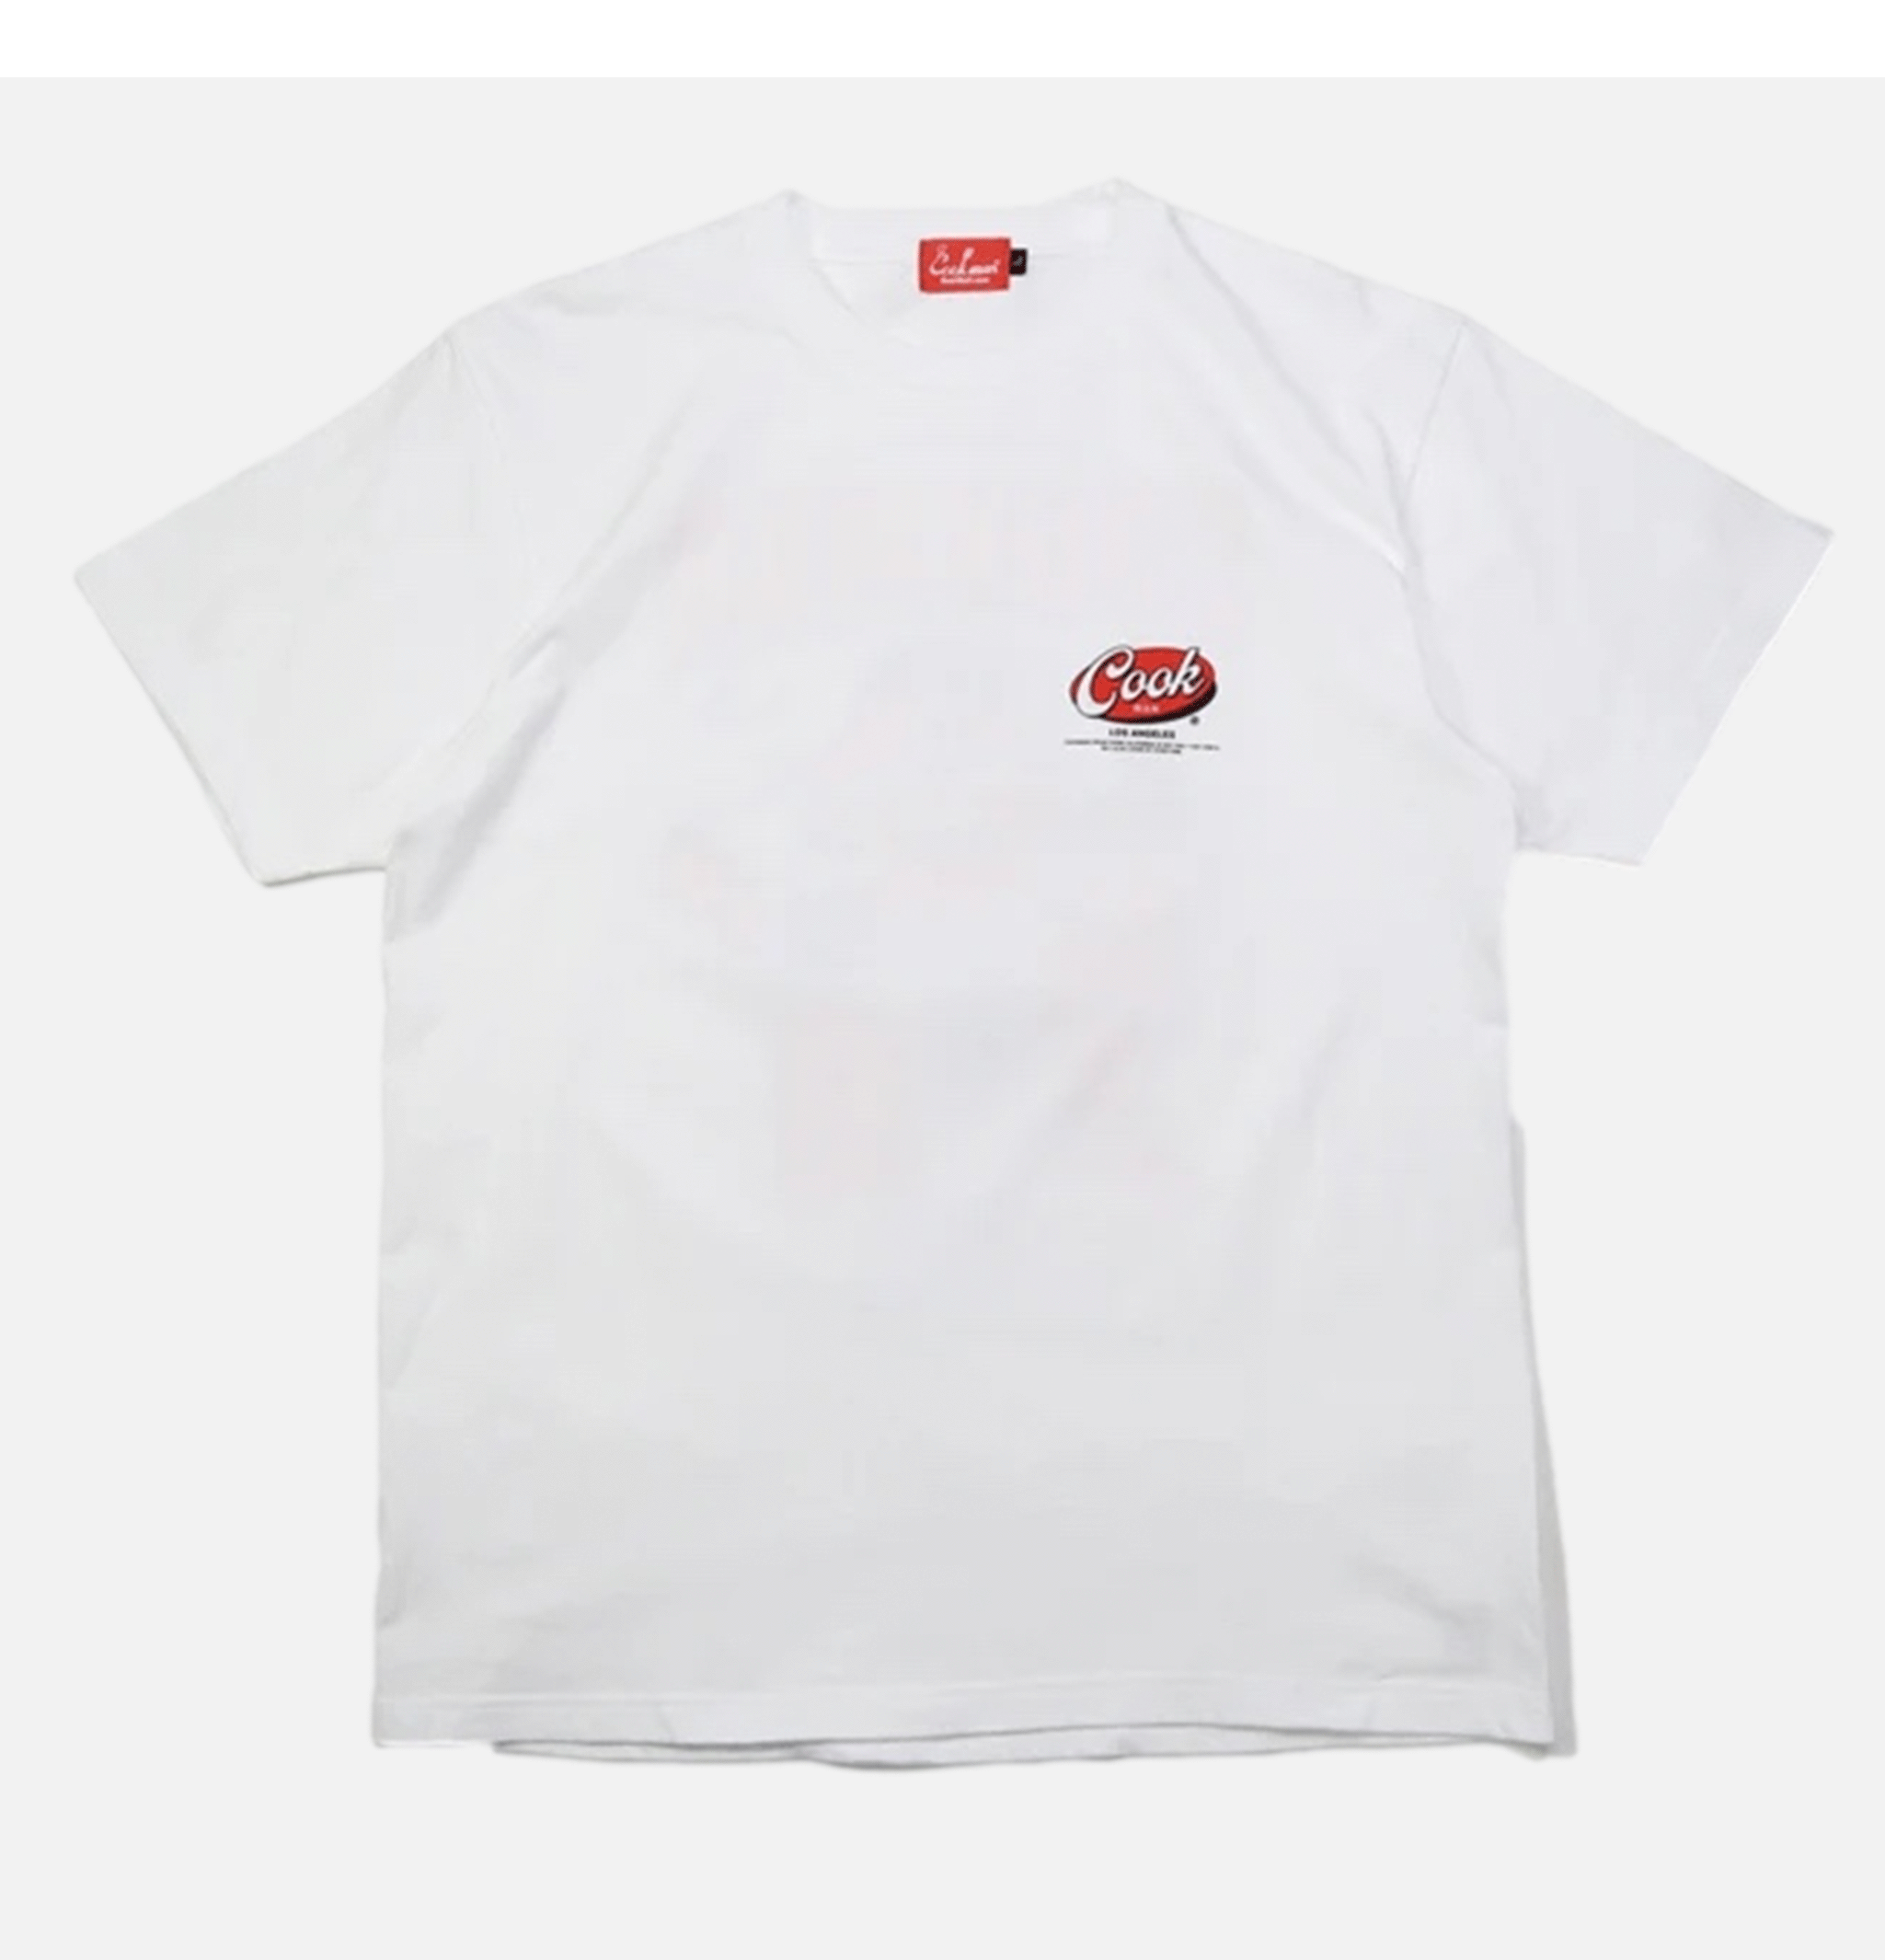 Cookman Tees T-shirt - 120th Anniversary : White